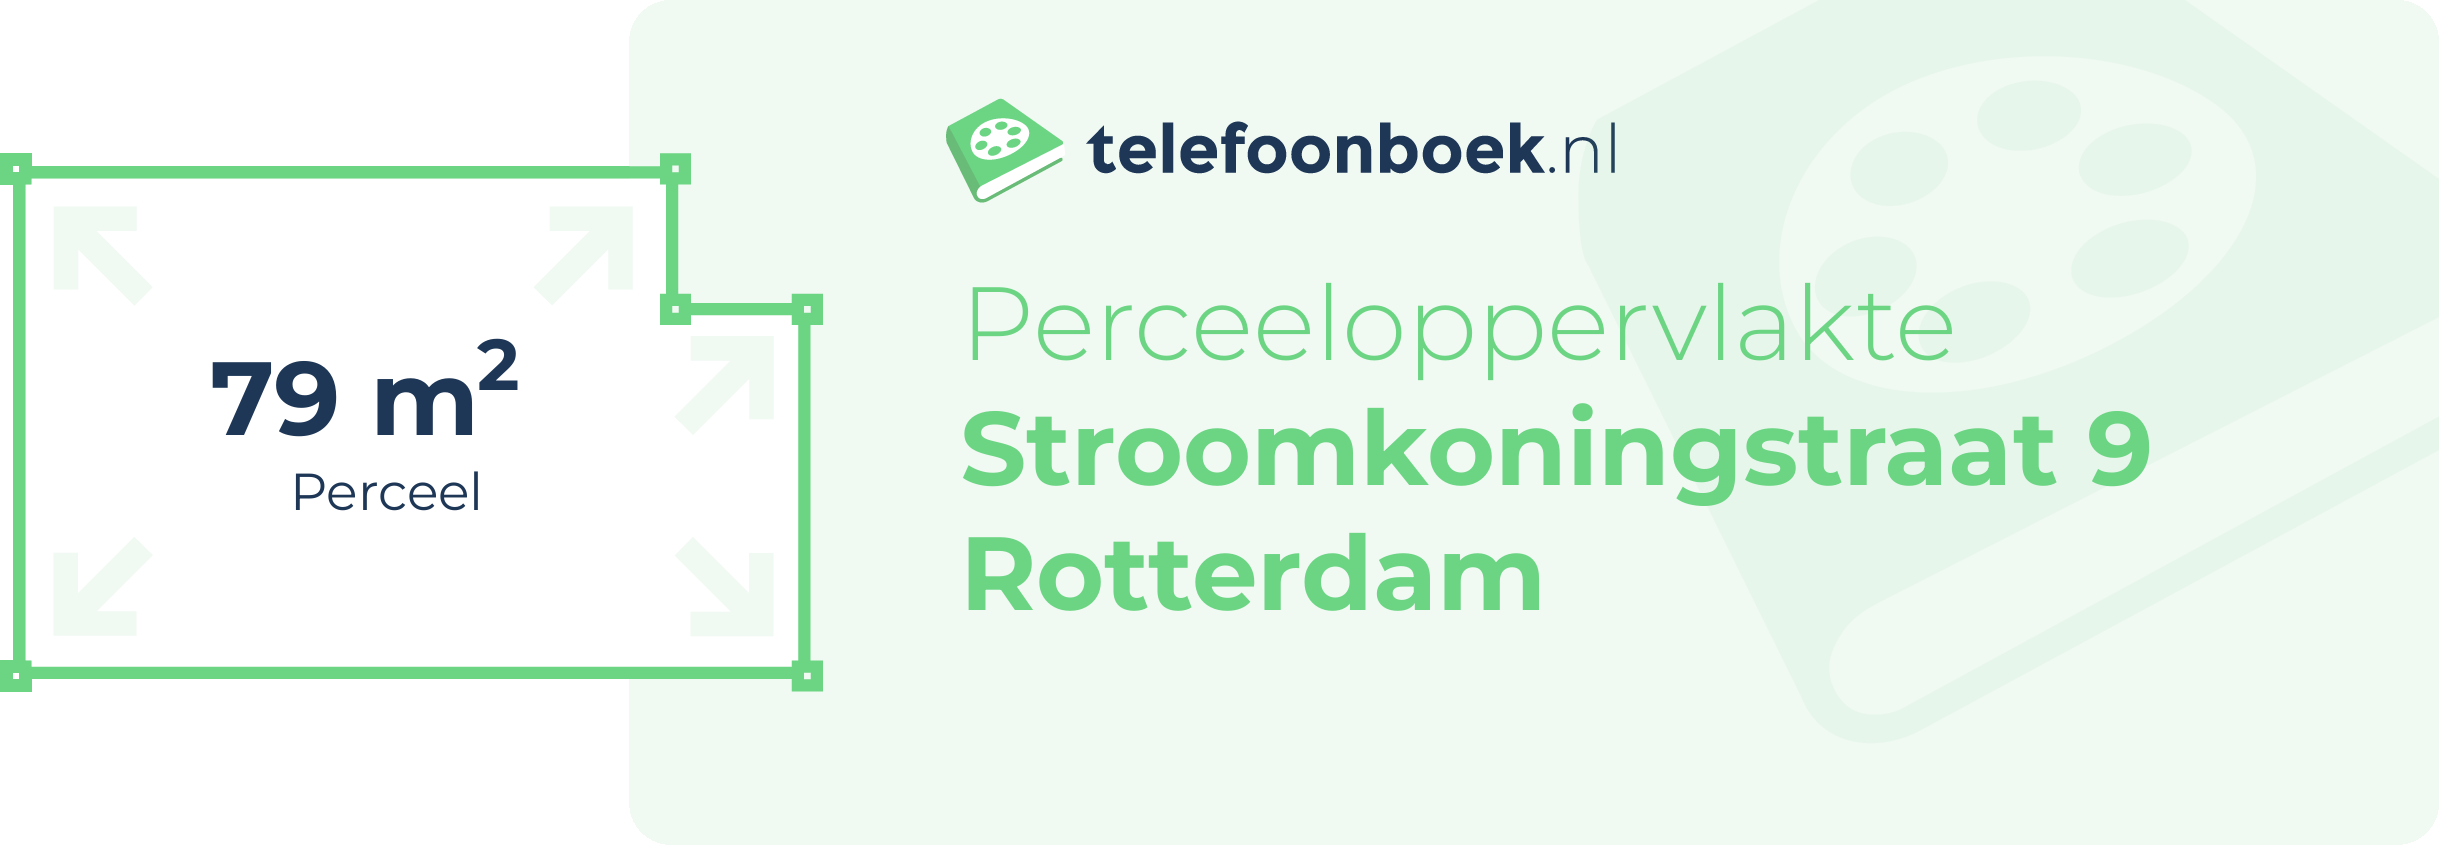 Perceeloppervlakte Stroomkoningstraat 9 Rotterdam